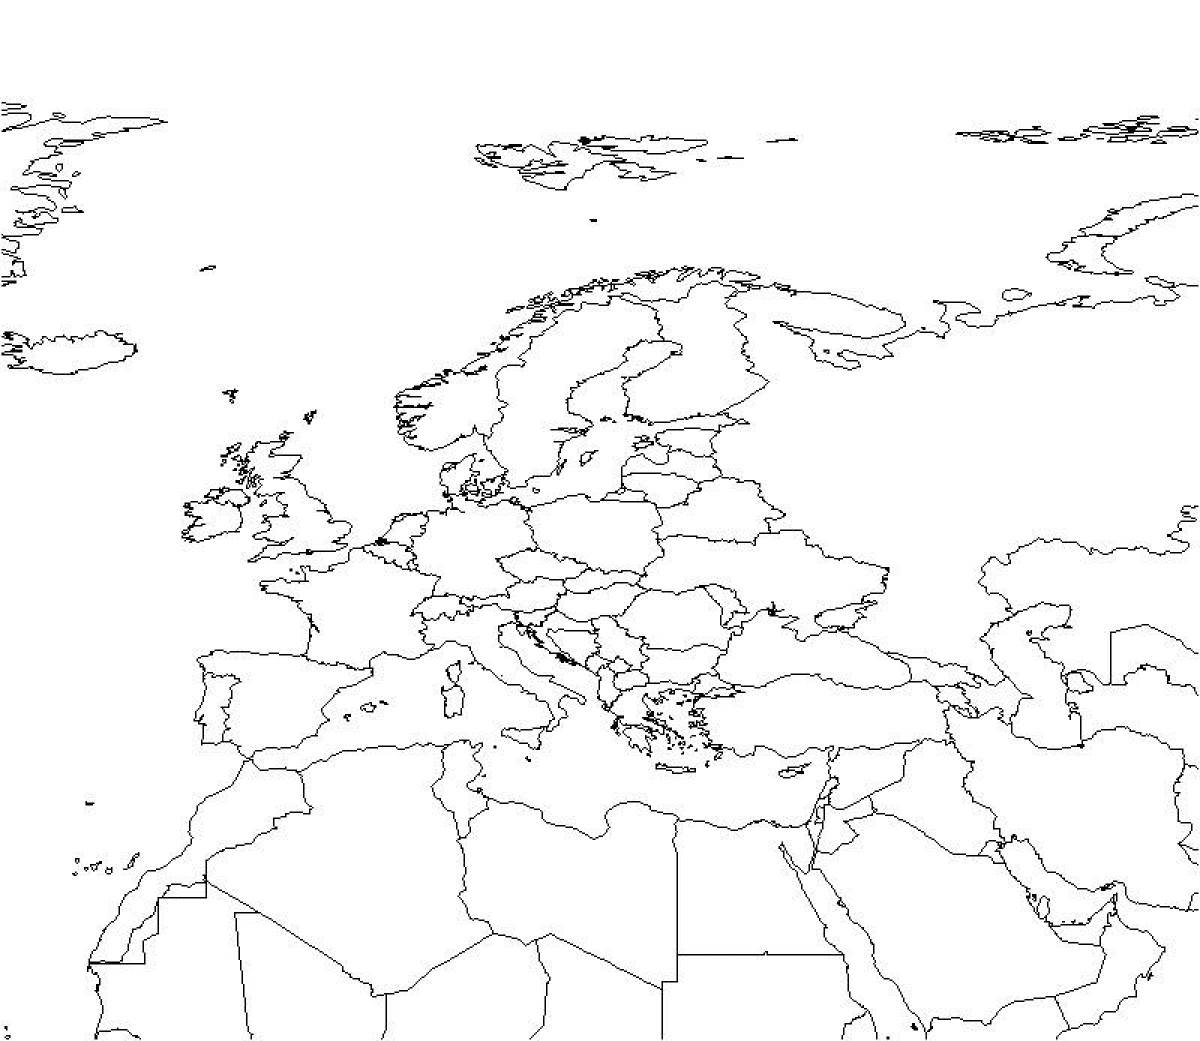 Wonderful map of europe